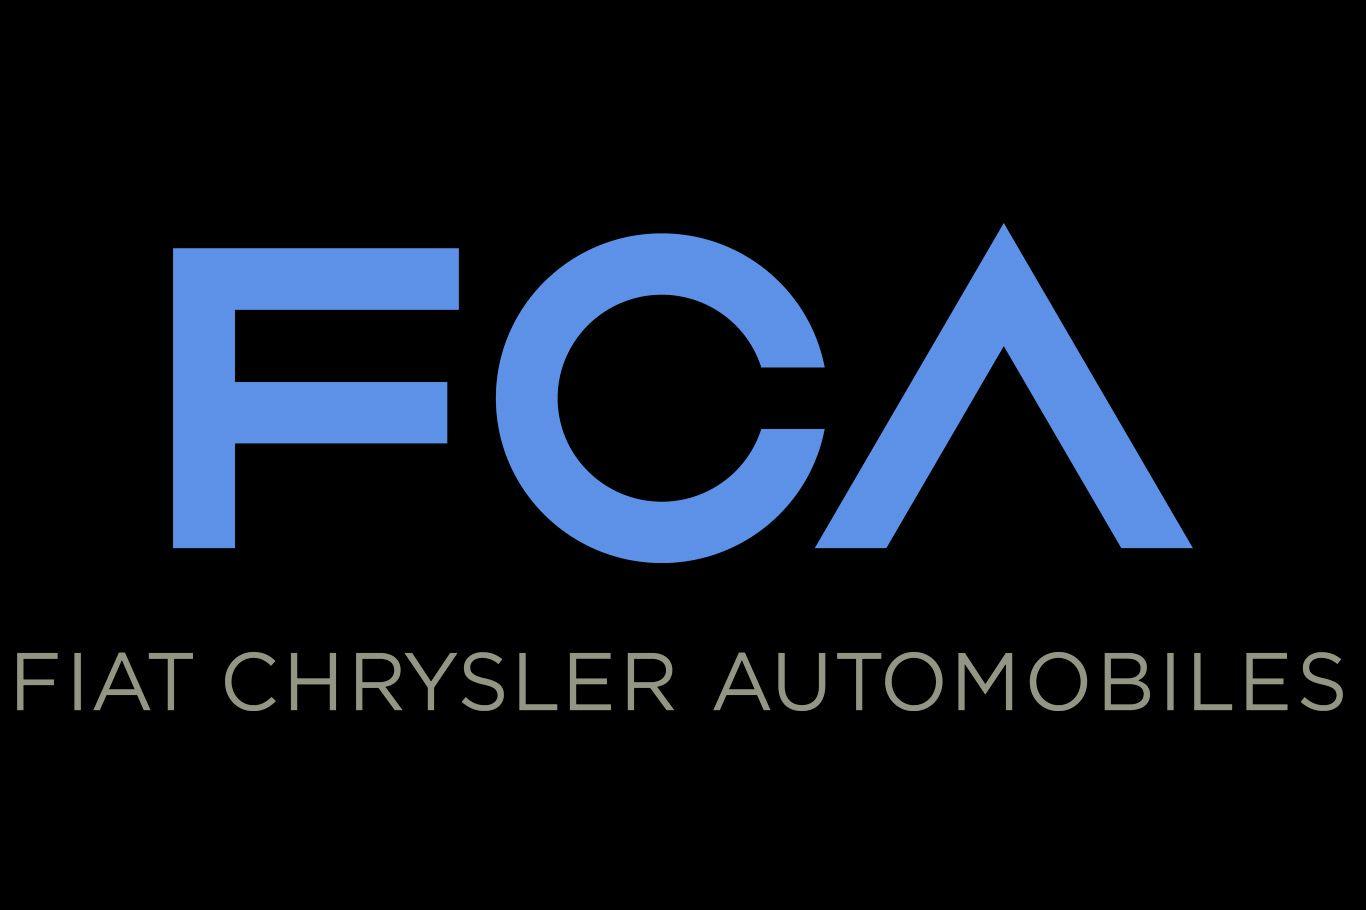 FCA Logo - Fca Logos